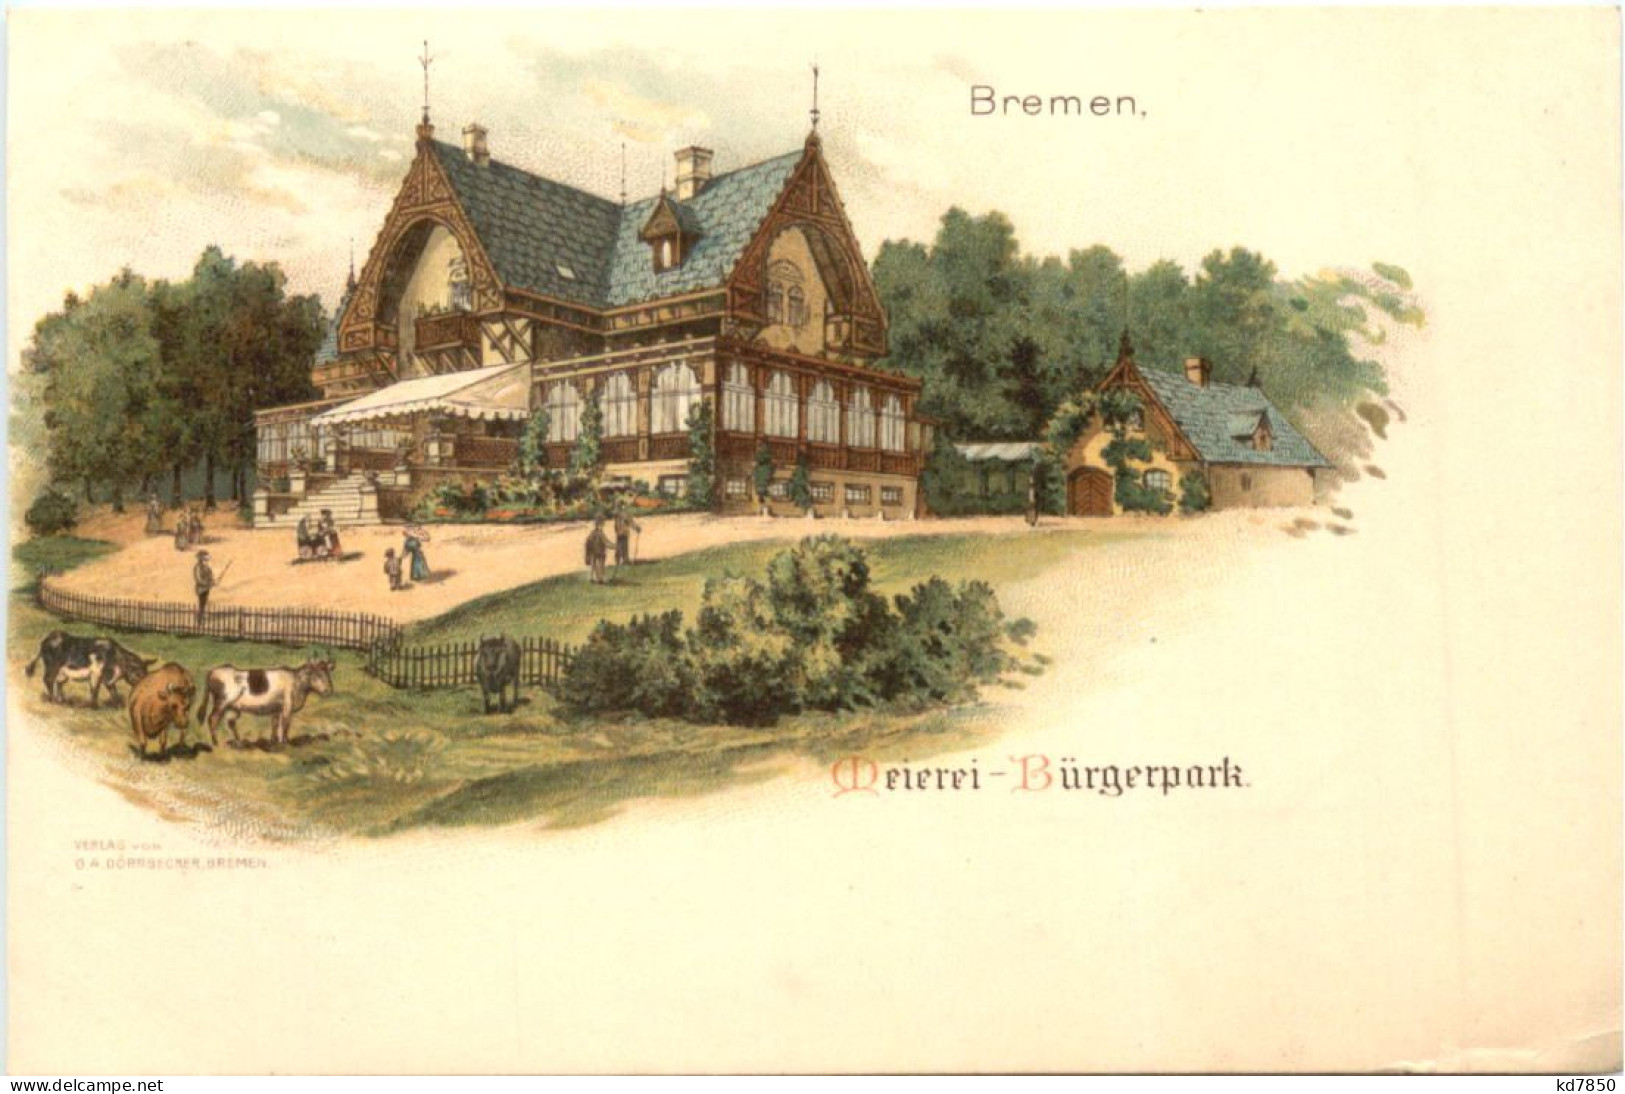 Bremen - Meierei Bürgerpark - Litho - Bremen